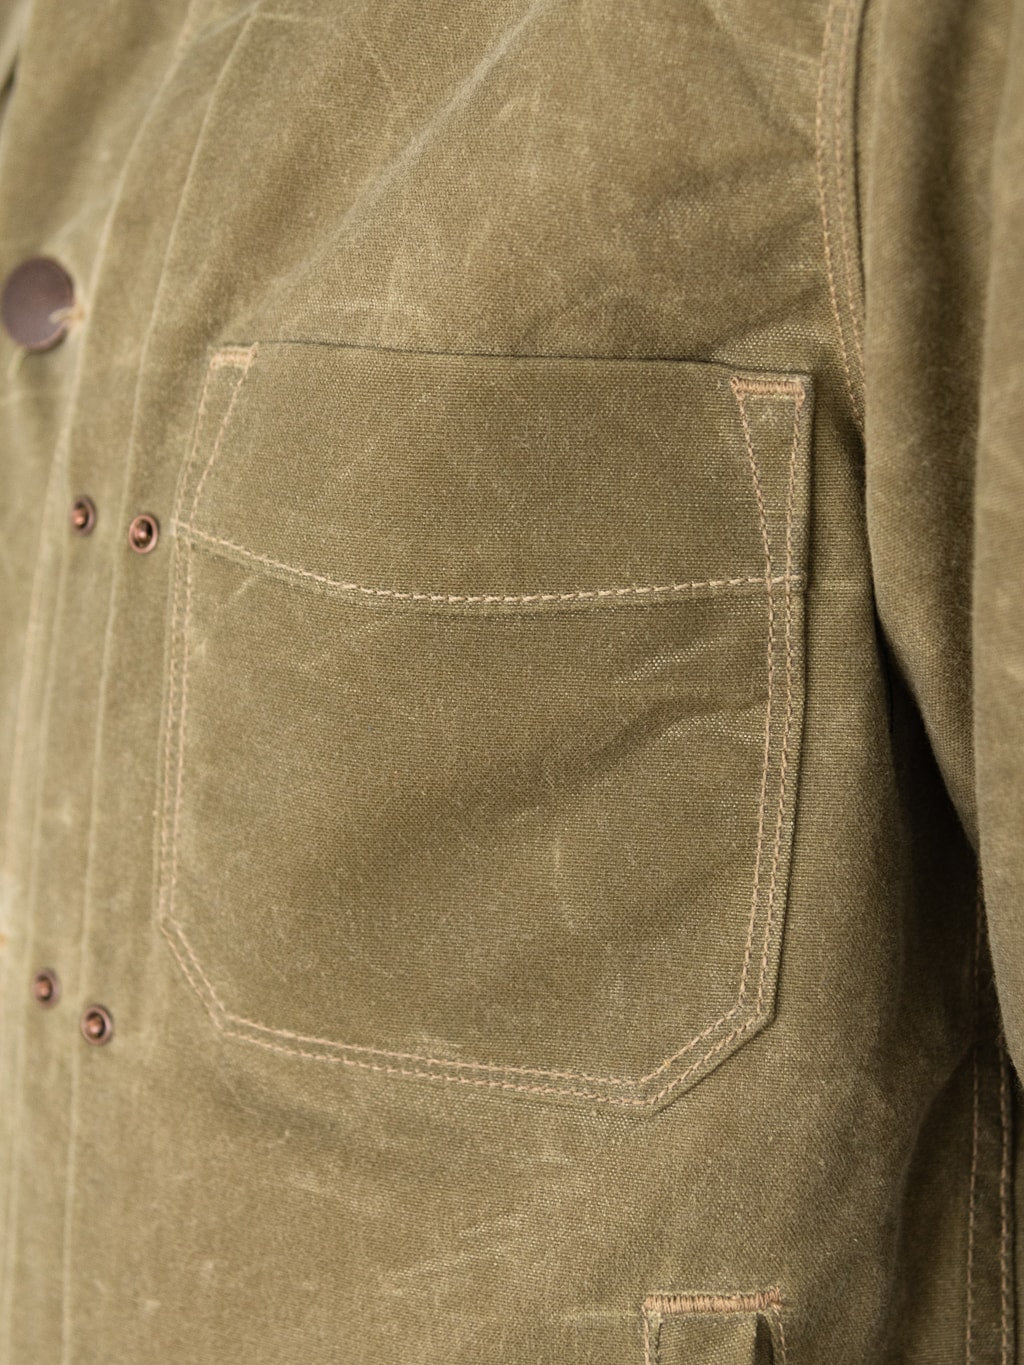 Freenote Cloth Riders Jacket Waxed Canvas Tobacco front pocket detail